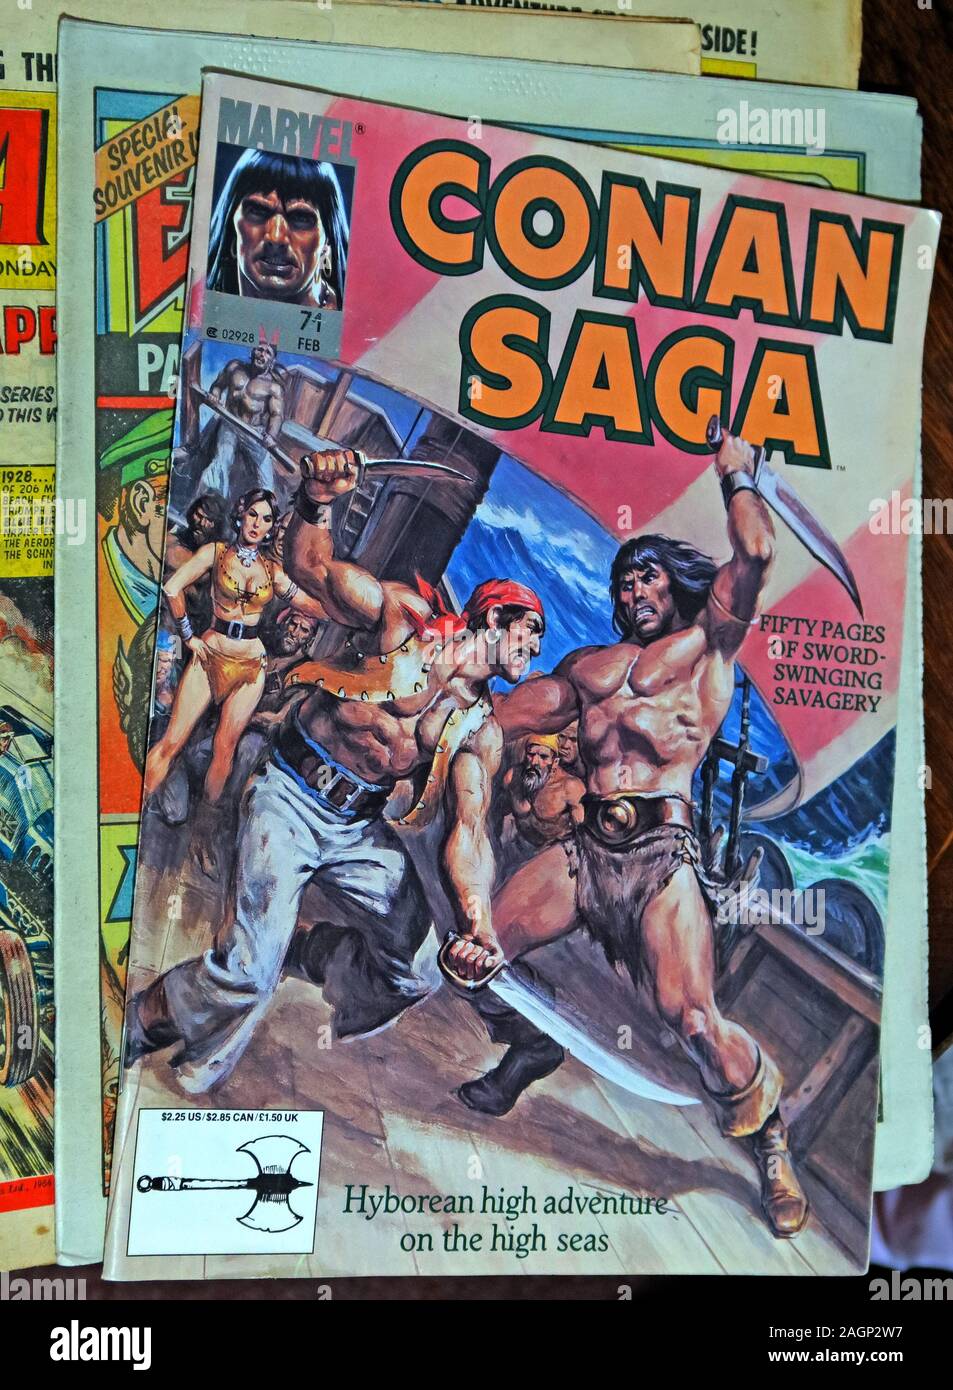 Marvel's Conan Saga Comic, Hyborean High Adventure on the high seas, Fifty pages of sword swinging savagery Stock Photo